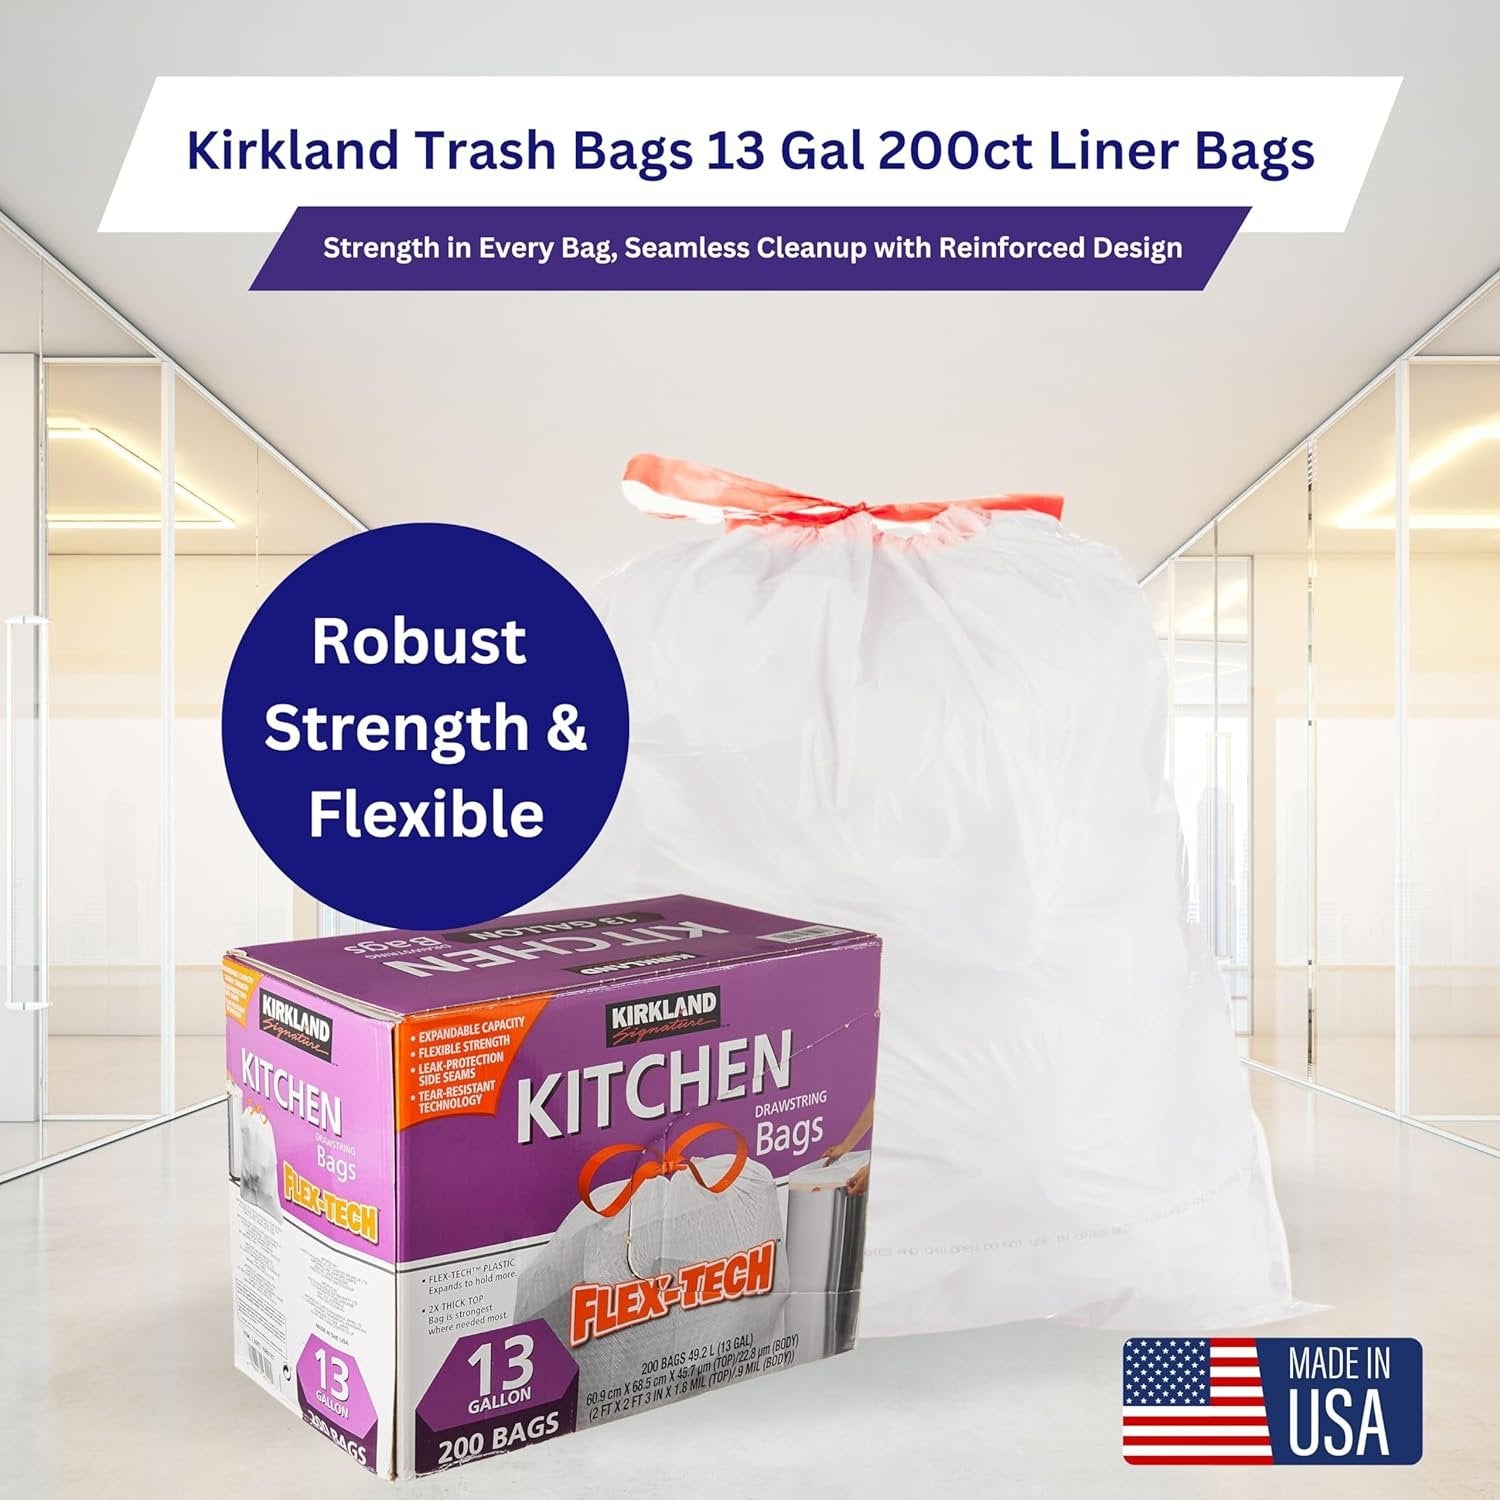 Kirkland Signature 13 Gallon Kitchen Drawstring Garbage Bag - Flex-Tech - 200 bags -  with Keychain